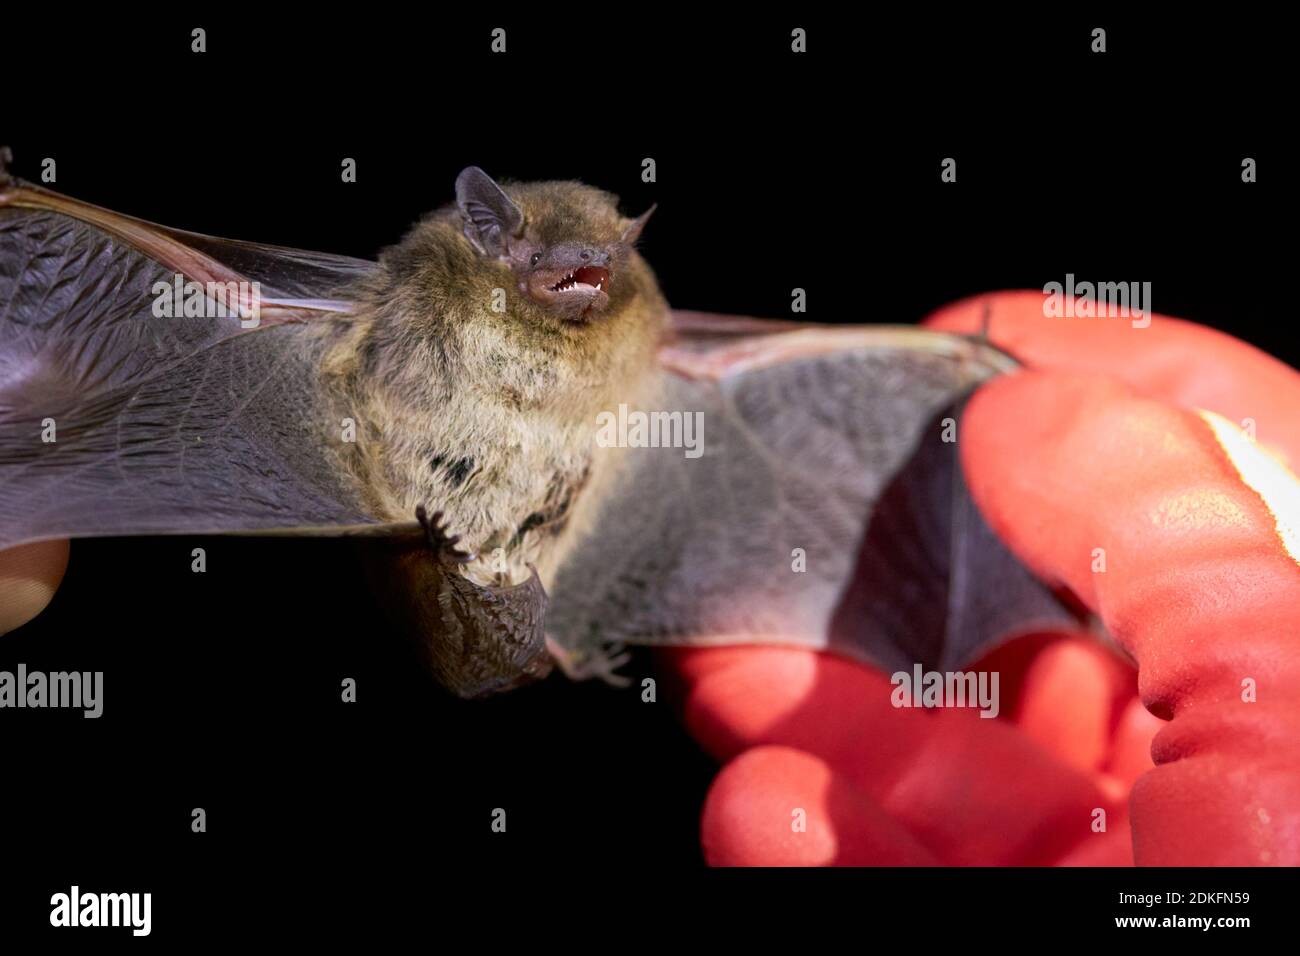 Bat, rough-skin bat, Pipistrellus nathusii, hand, research Stock Photo